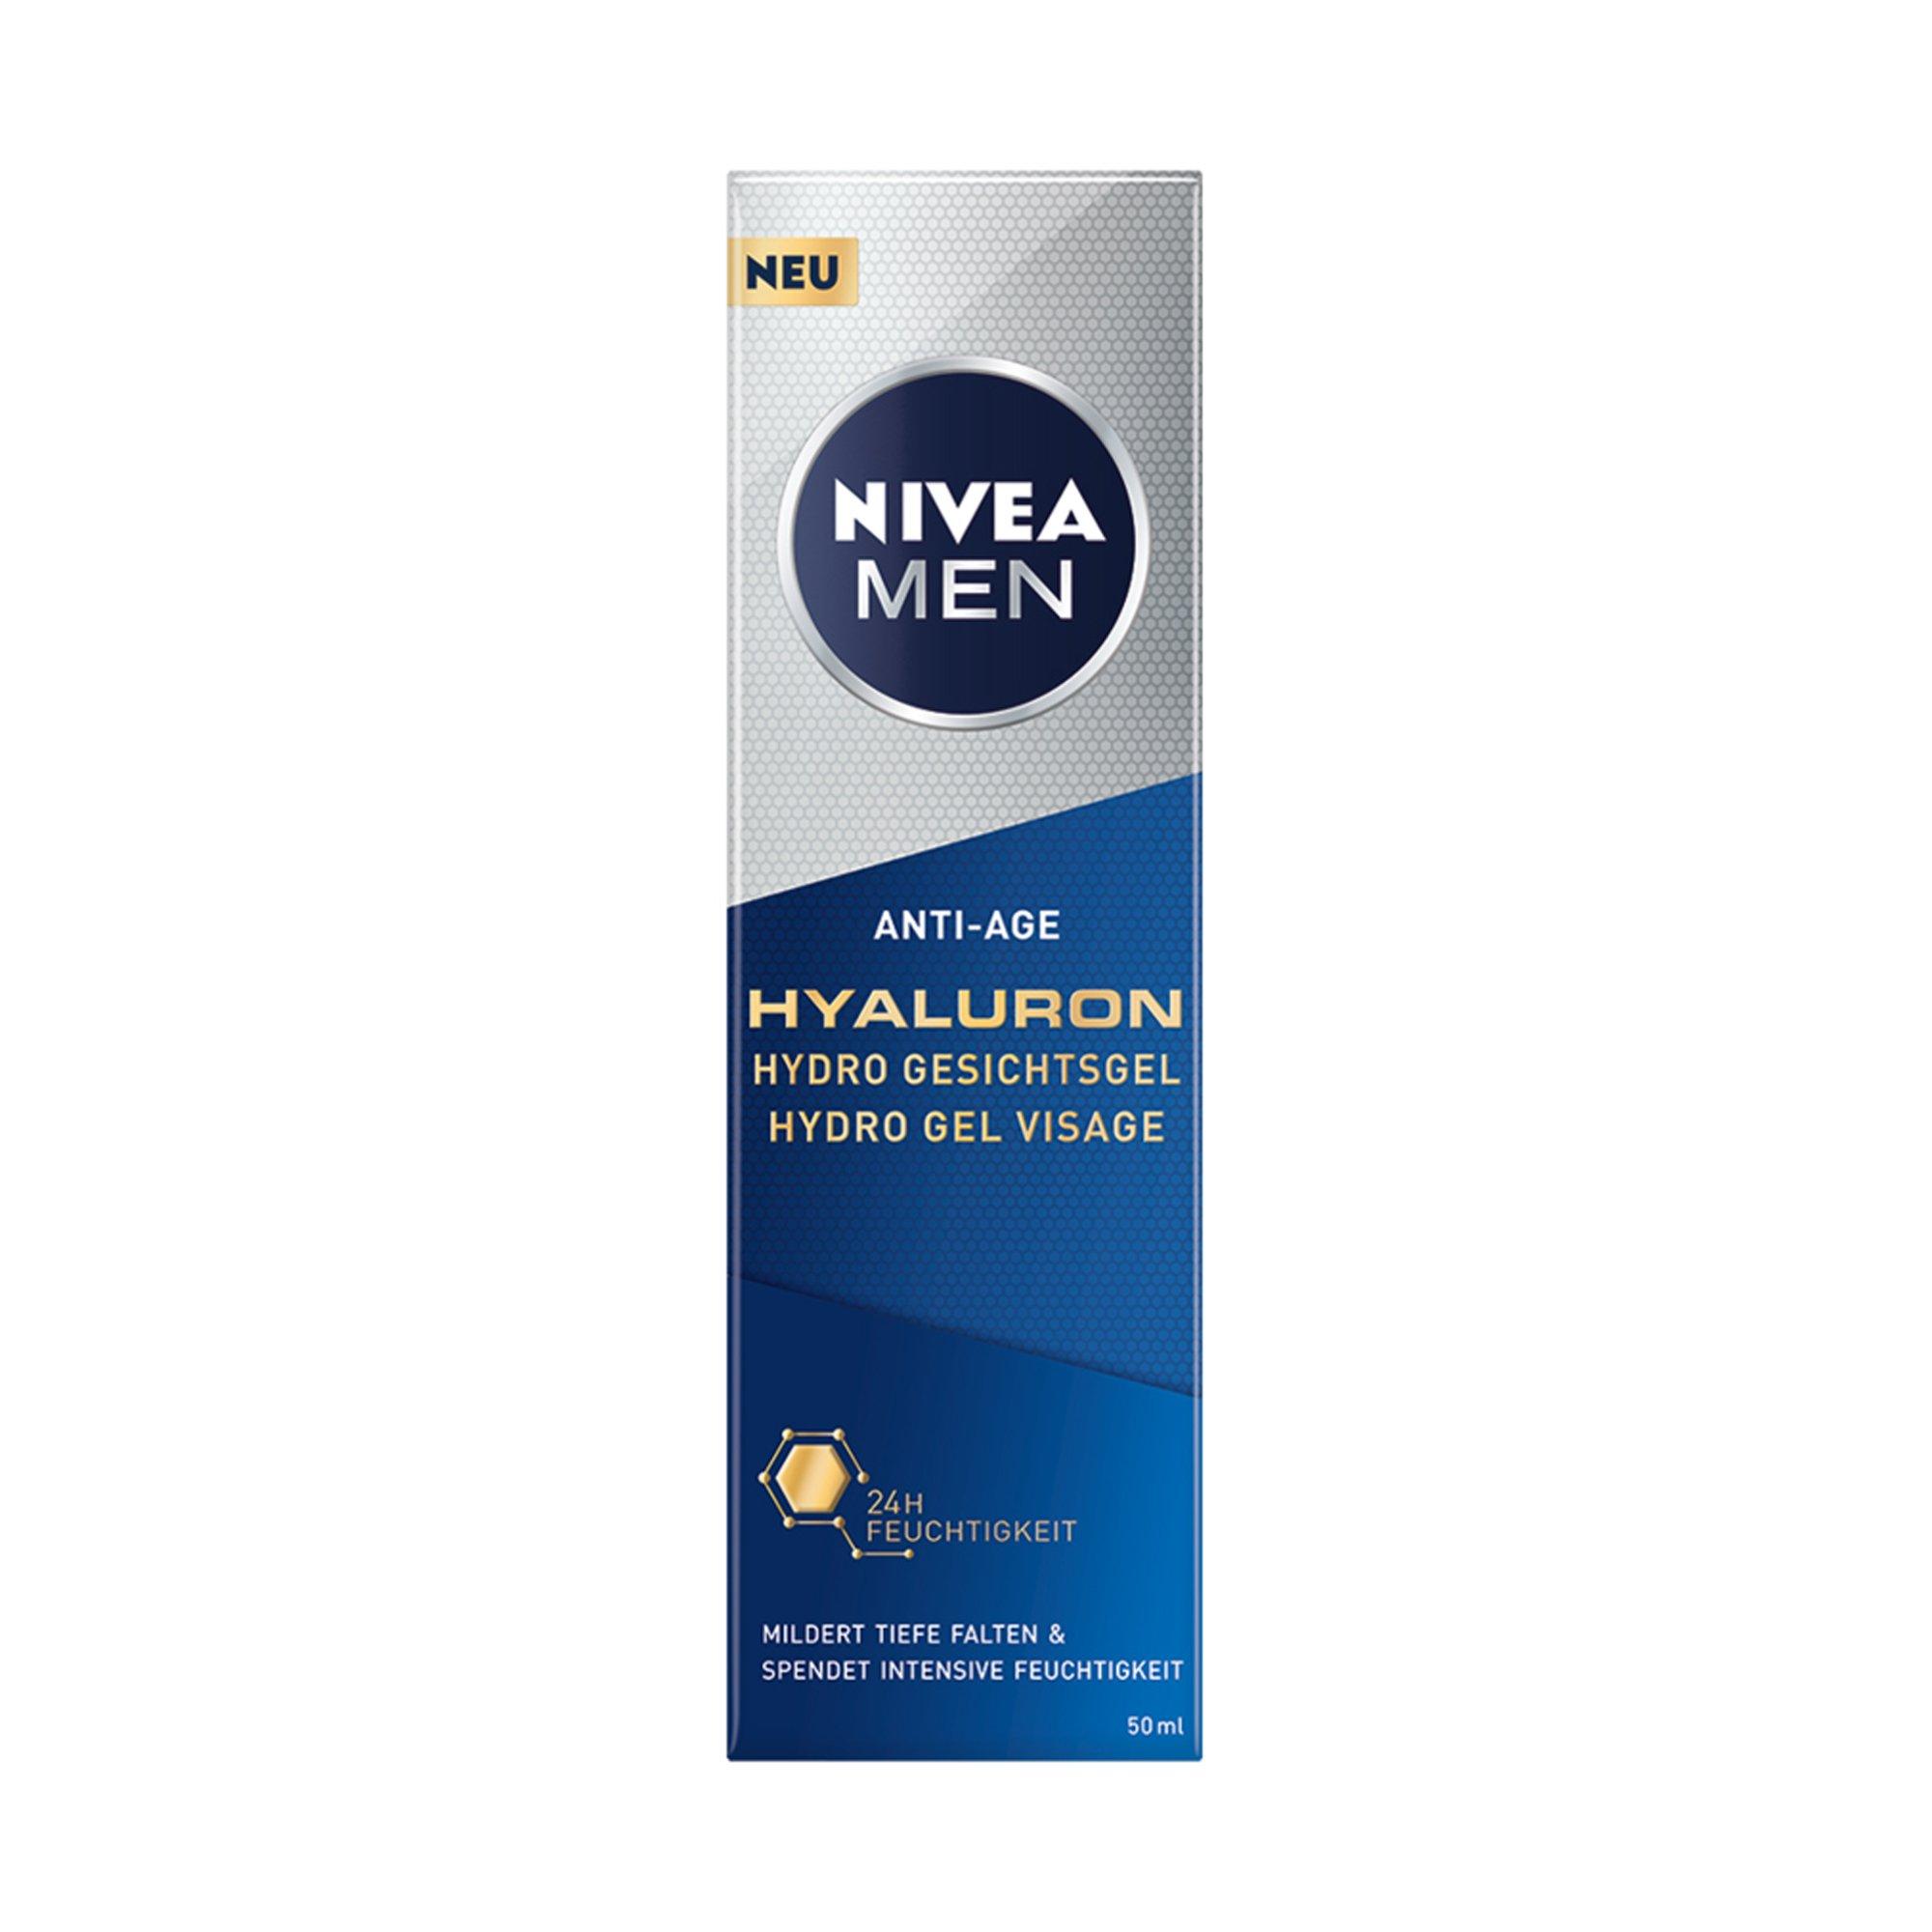 NIVEA Men Anti-Age Hyaluron Gesichtsgel Hydro Gel Visage Anti-Age Hyaluron 